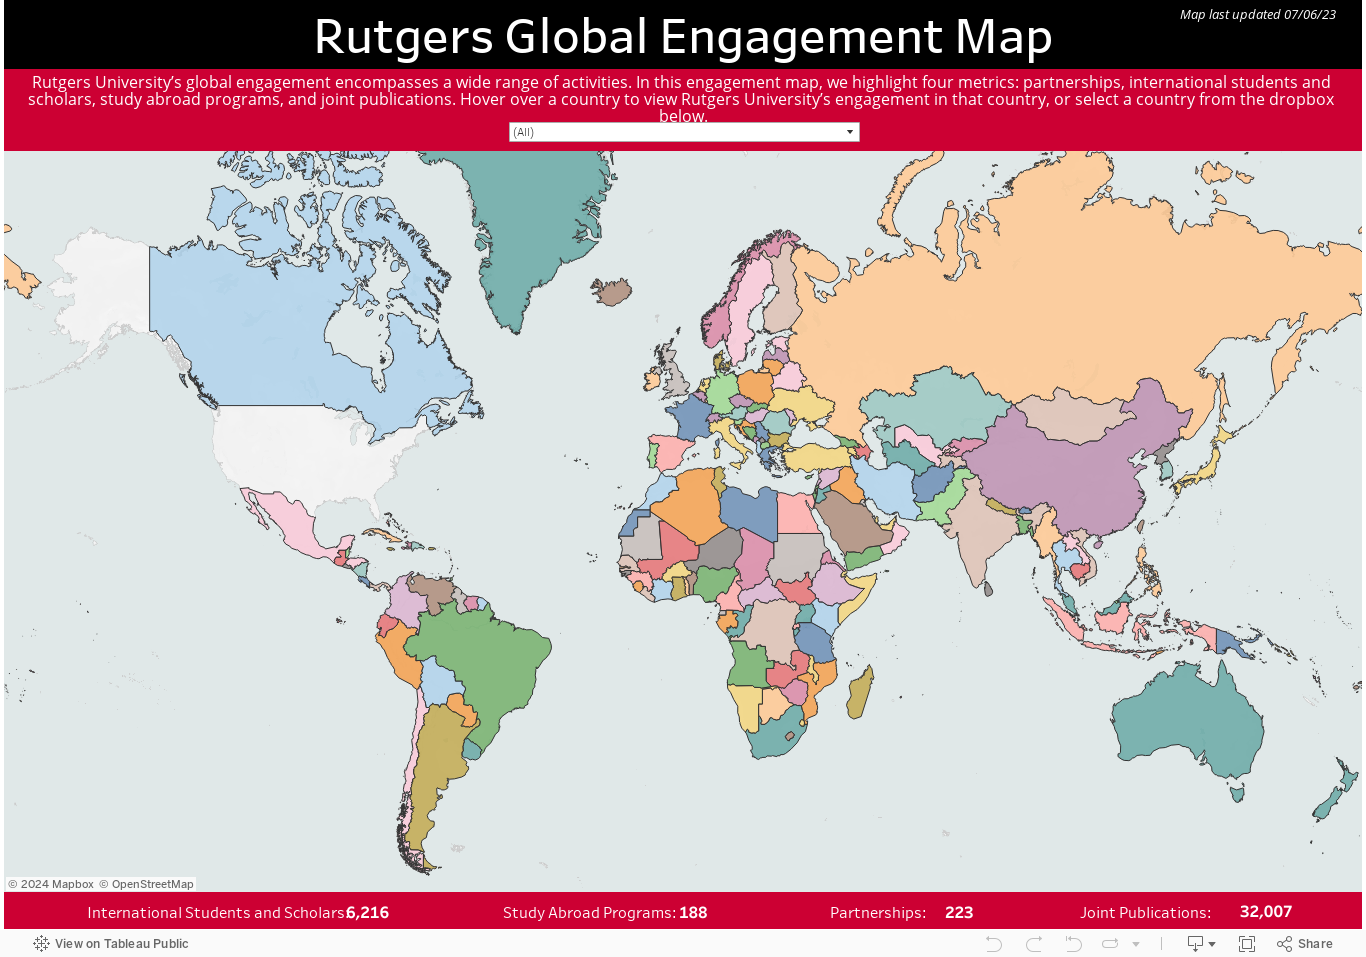 Engagement Map 